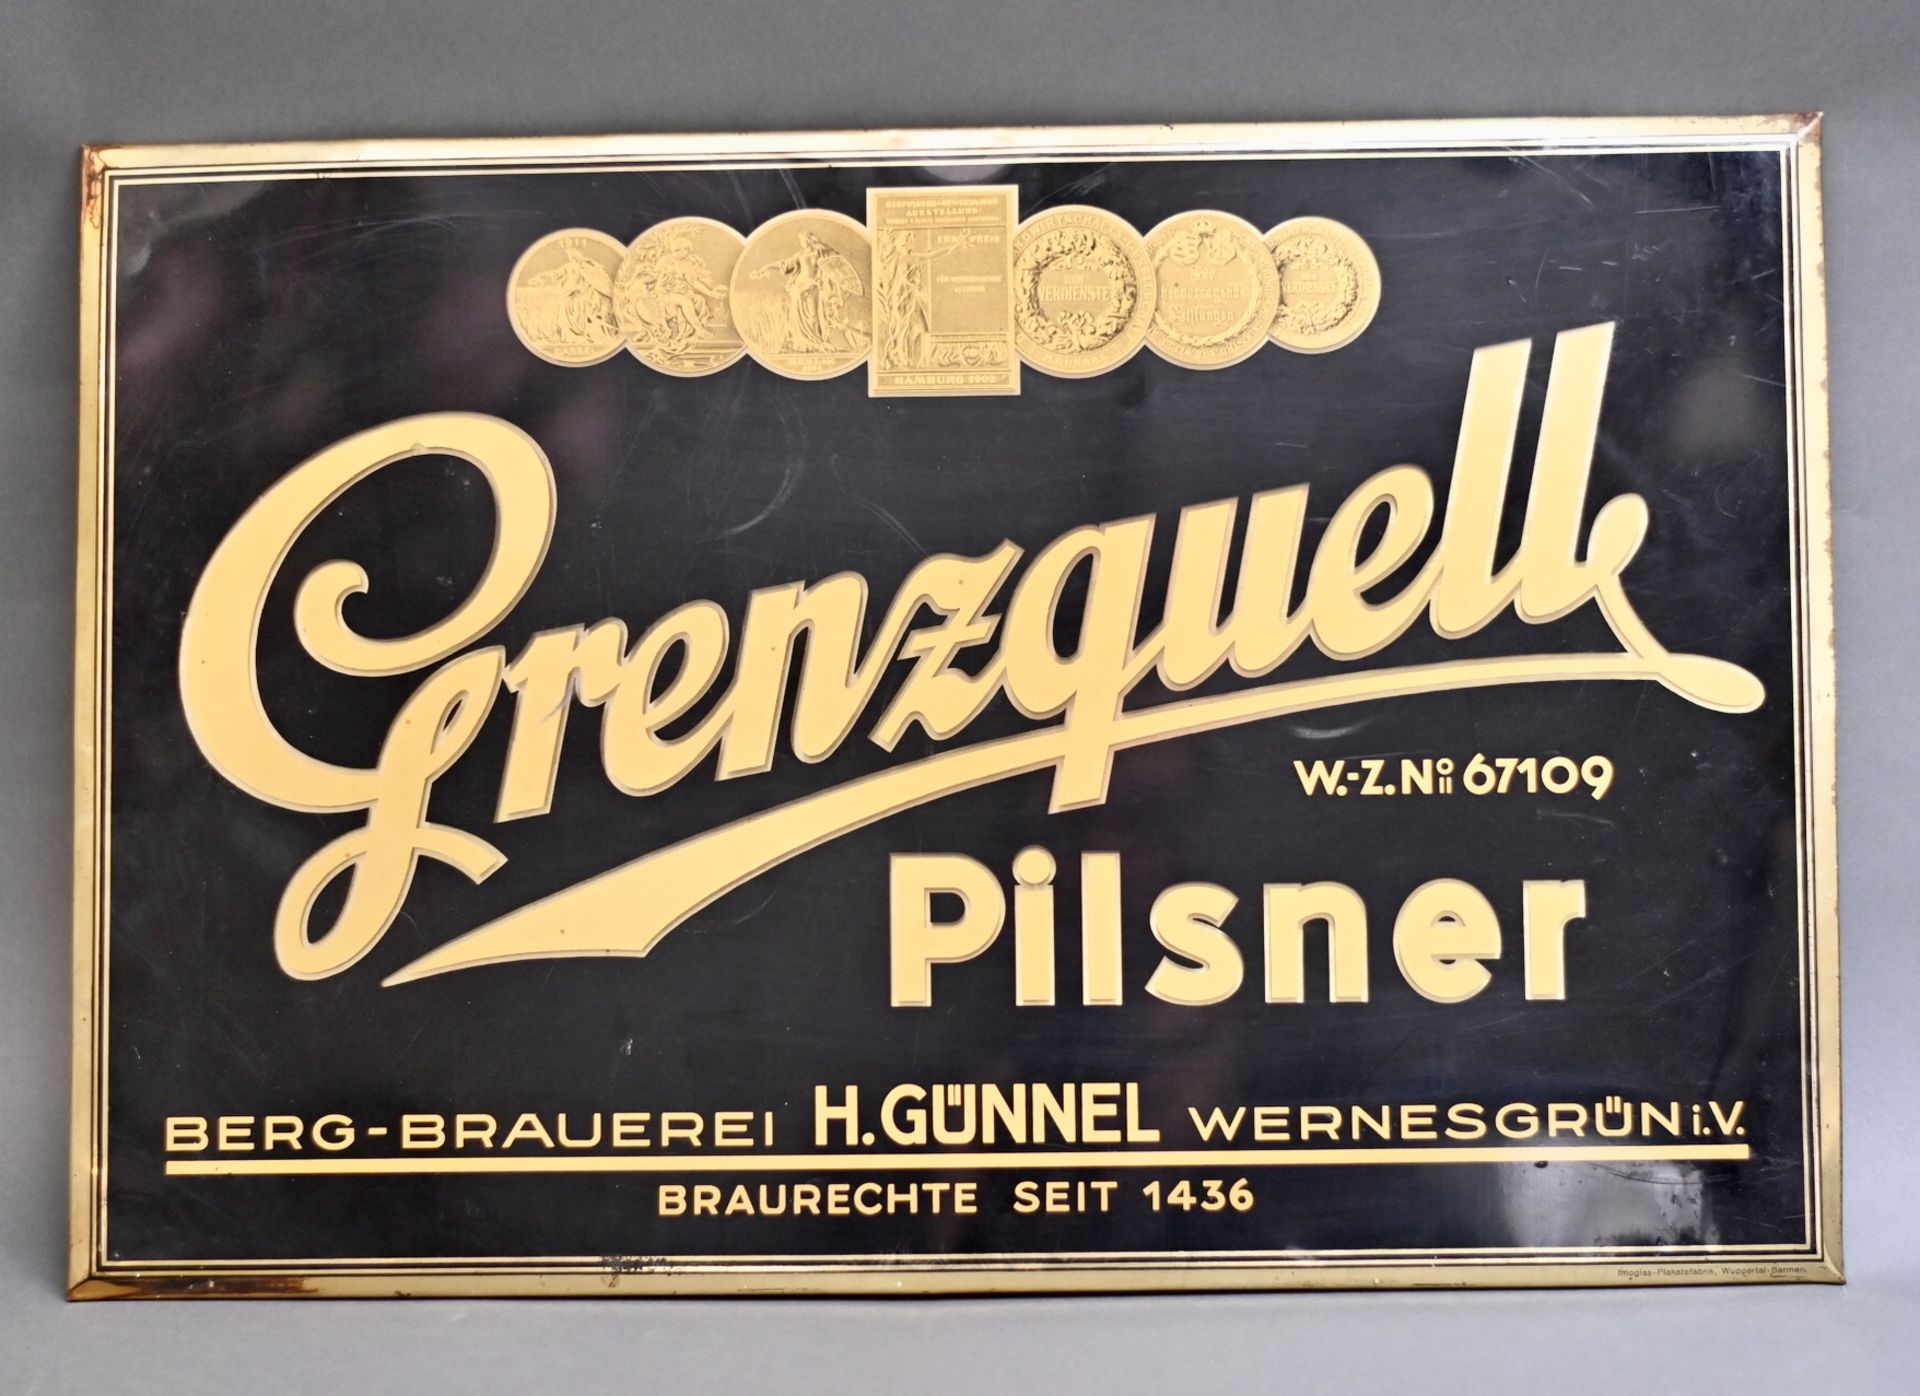 Imoglas-Werbeschild "Grenzquell Pilsner" Günnel Wernesgrün, Plakatef. Wuppertal-Barmen, Rücks.